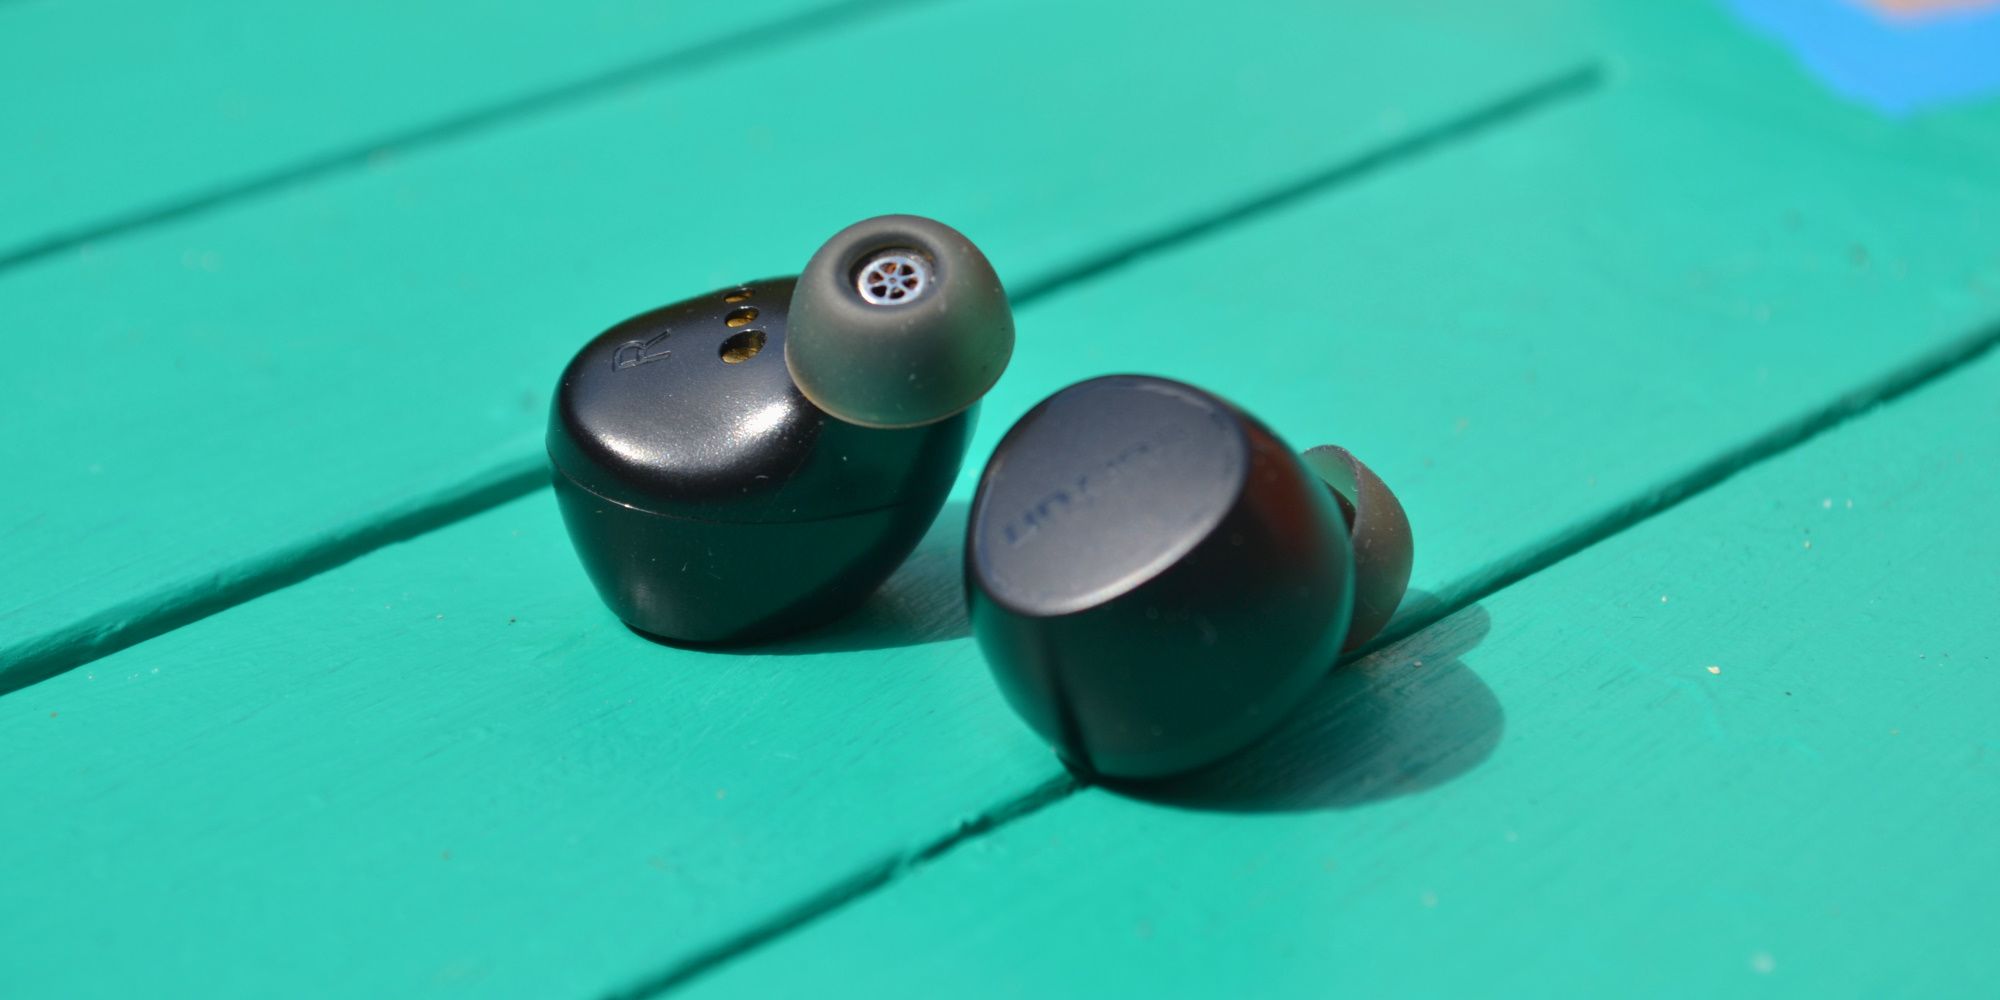 EarFun Free 2 Review: Surprisingly Good Budget True Wireless Earbuds